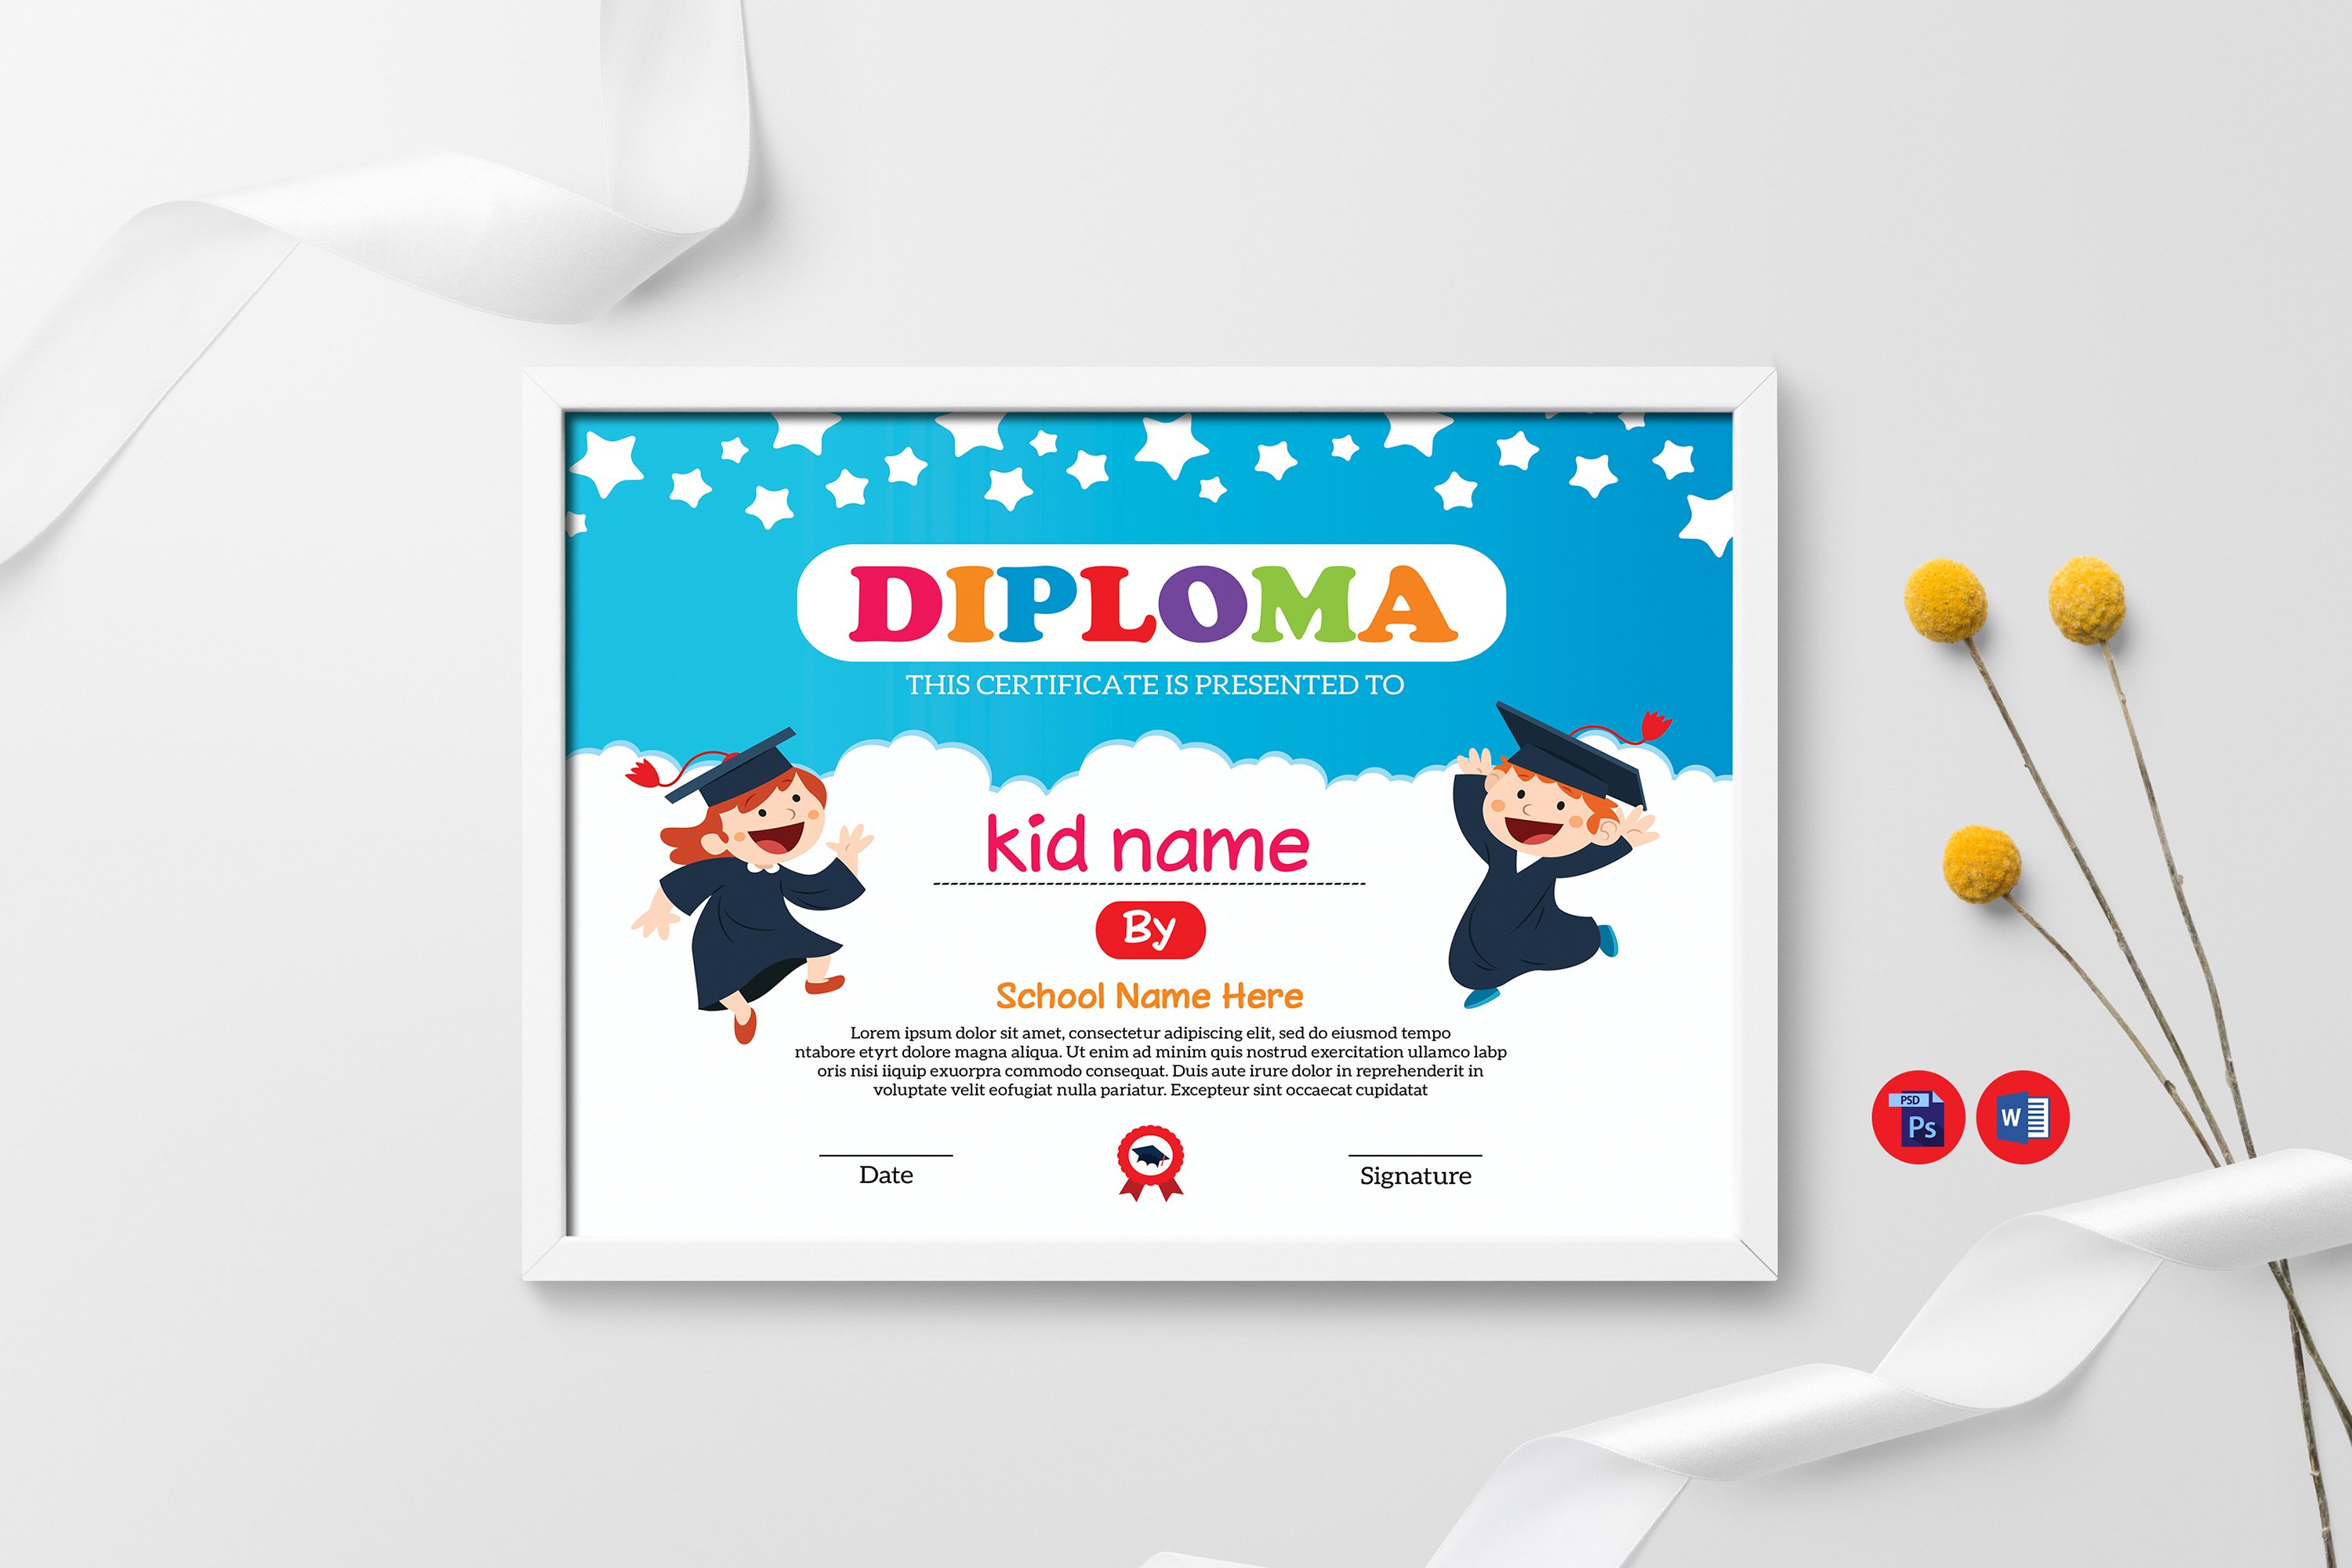 Certificate kids diploma cover image.